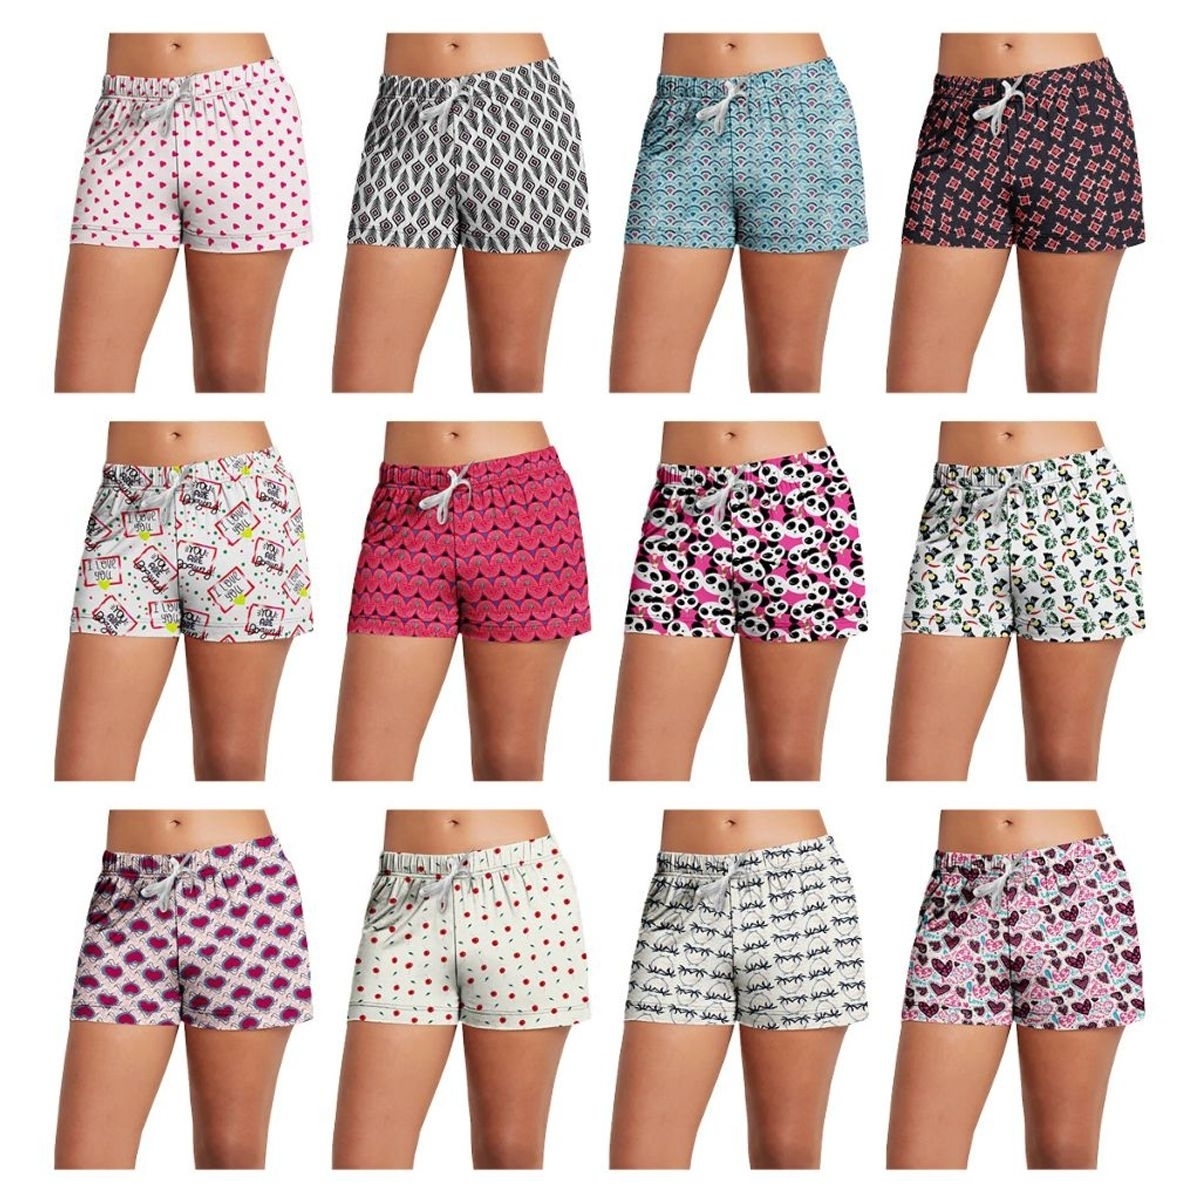 Multi-Pack: Women's Super-Soft Lightweight Fun Printed Comfy Lounge Bottom Pajama Shorts W/ Drawstring - 3-pack, X-large, Shapes